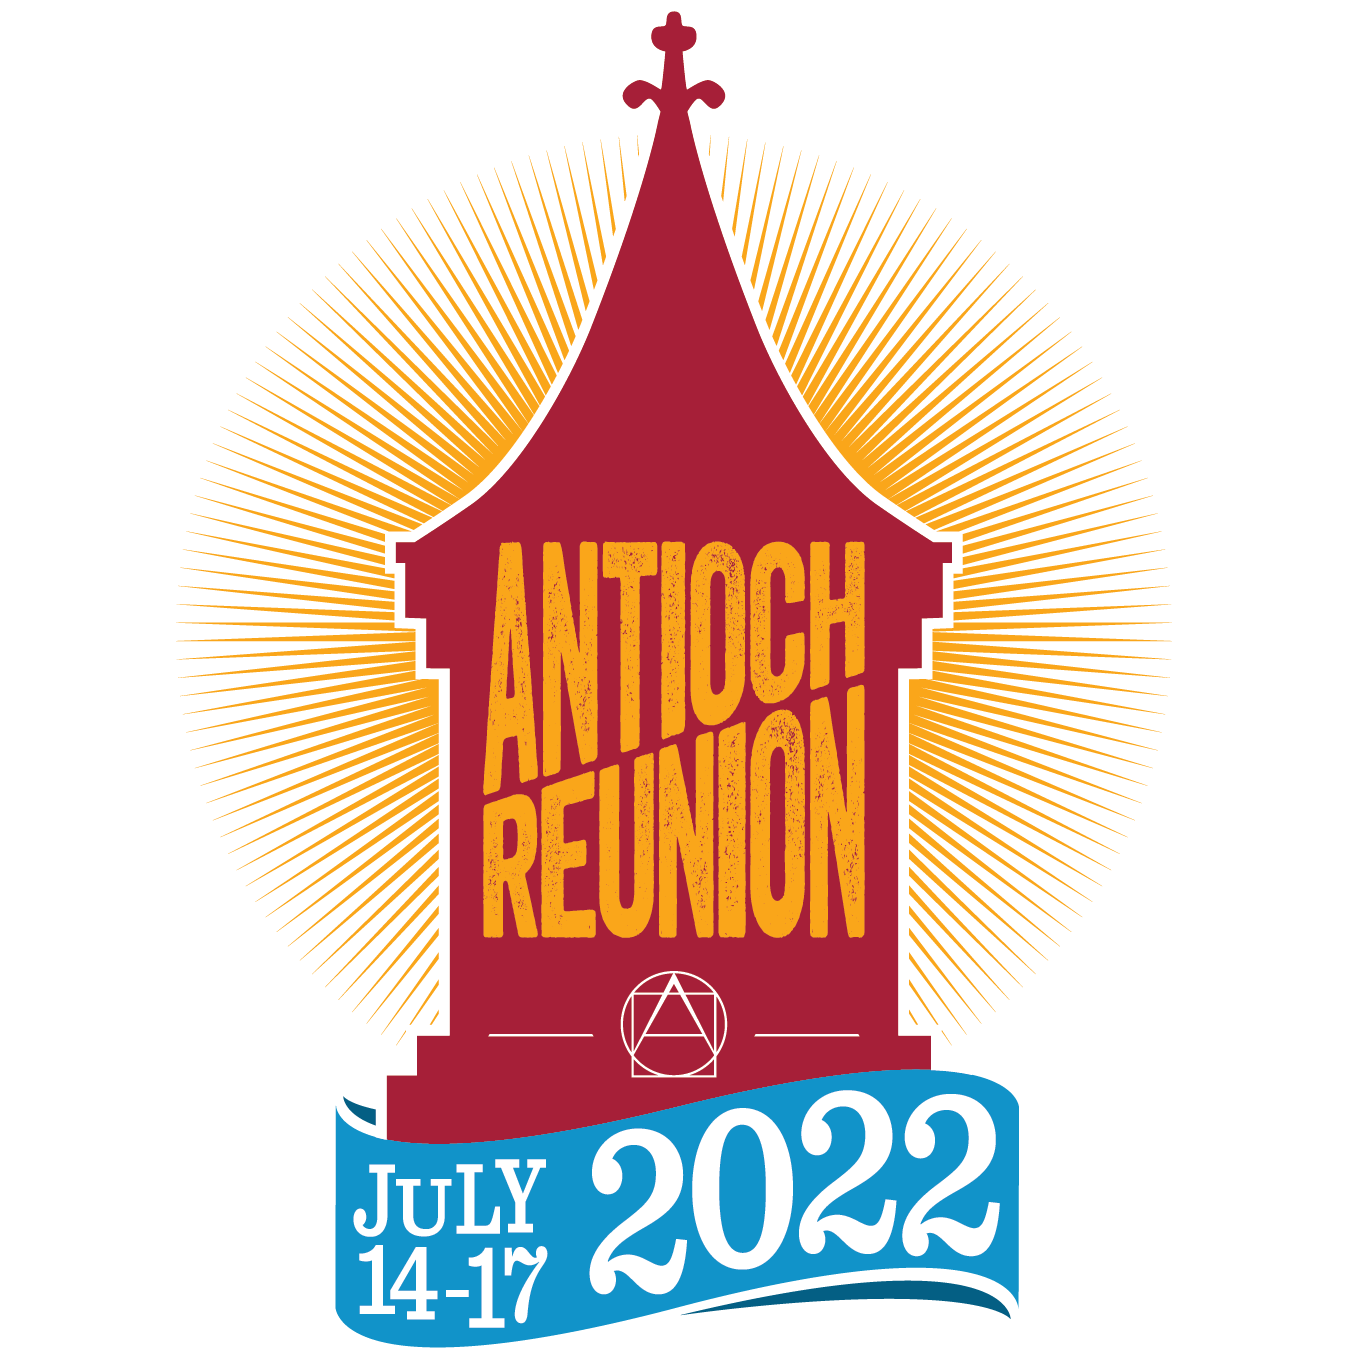 Antioch College Reunion July 14-17 2022